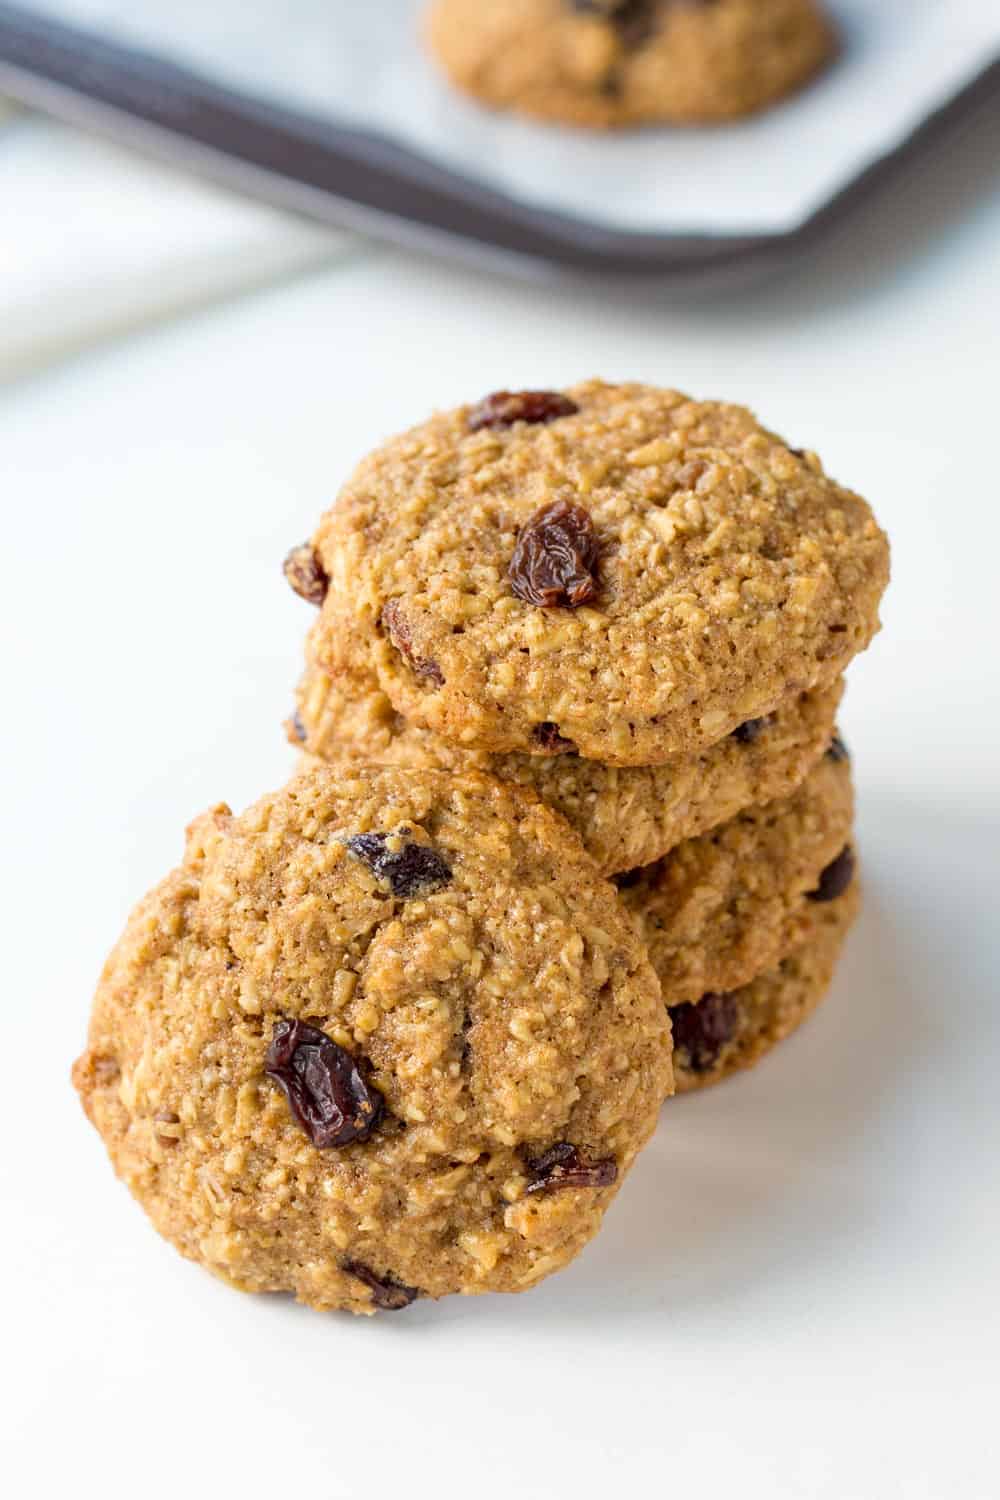 Oatmeal raisin cookie recipe without brown sugar - kotilock